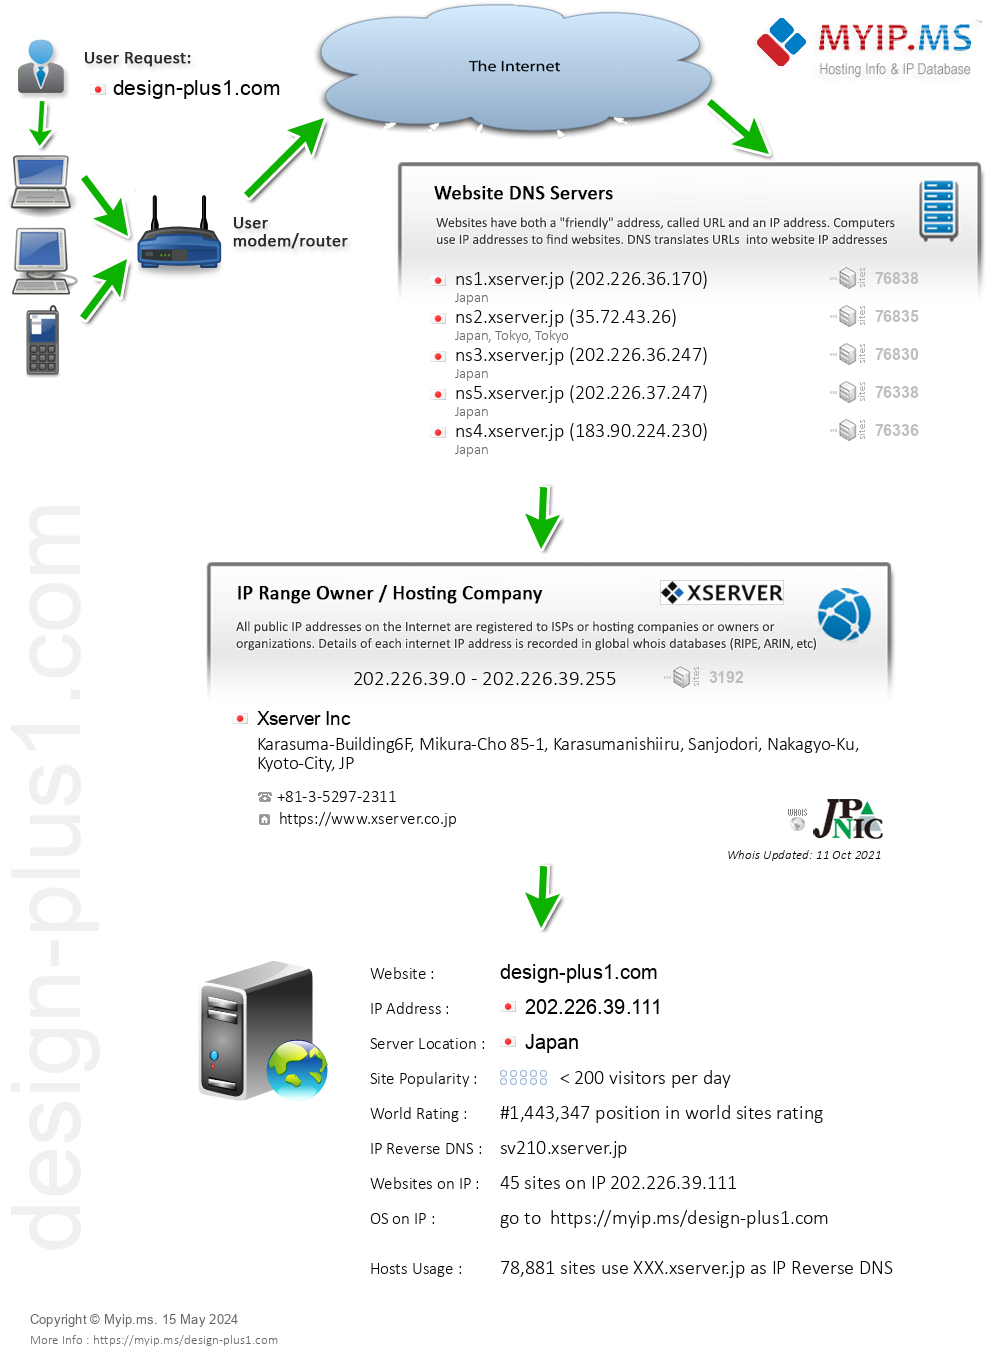 Design-plus1.com - Website Hosting Visual IP Diagram